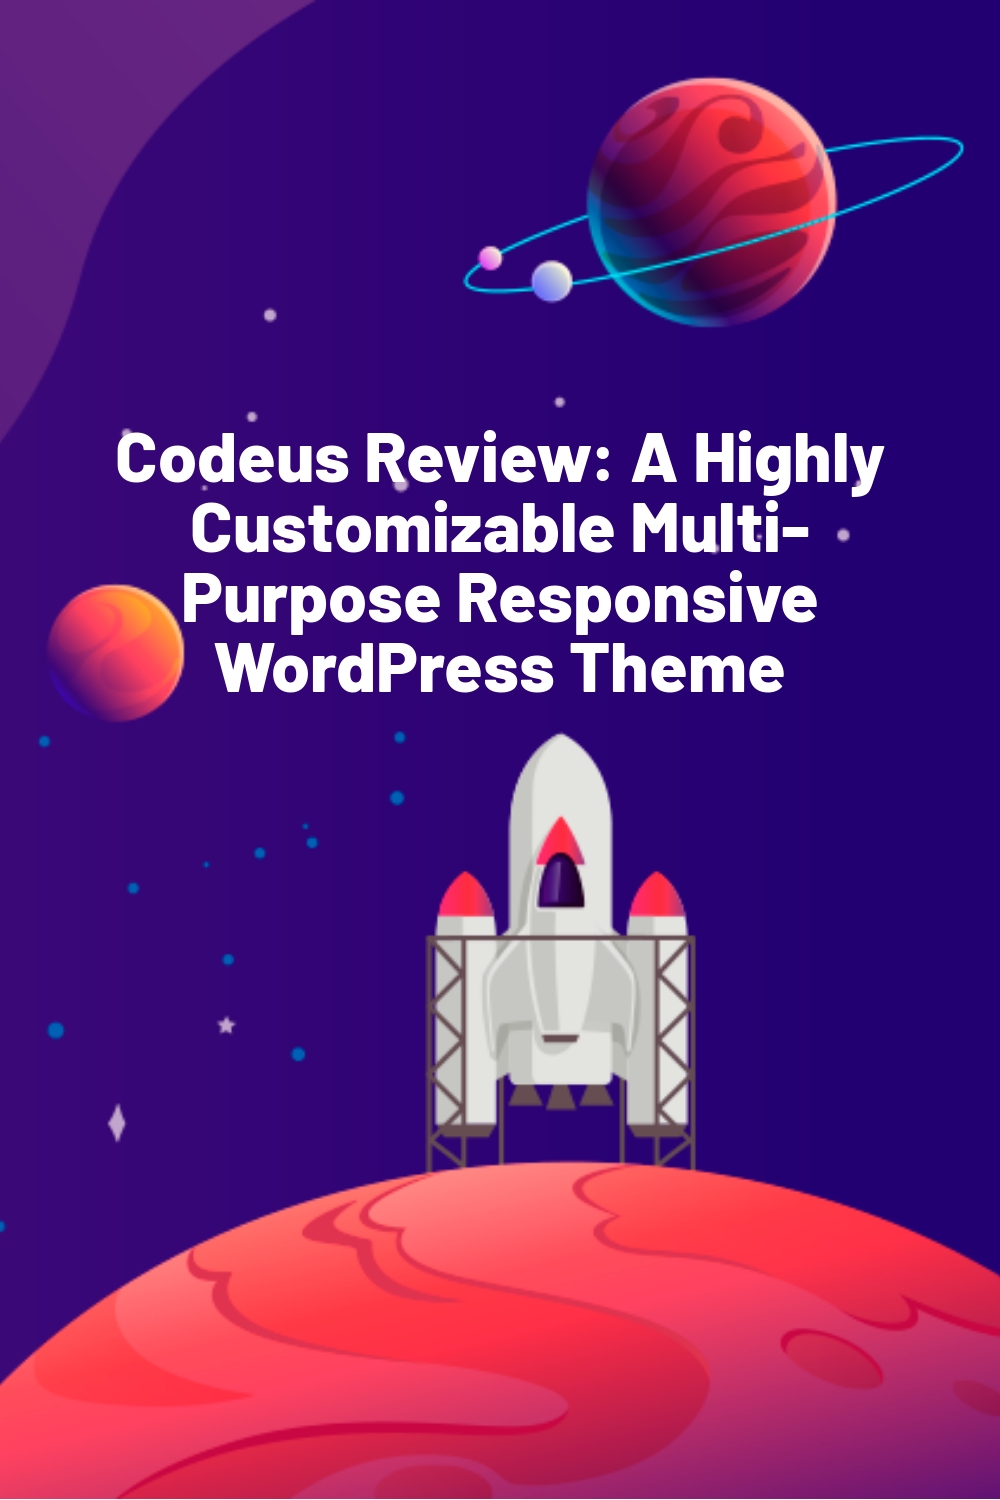 Codeus Review: A Highly Customizable Multi-Purpose Responsive WordPress Theme